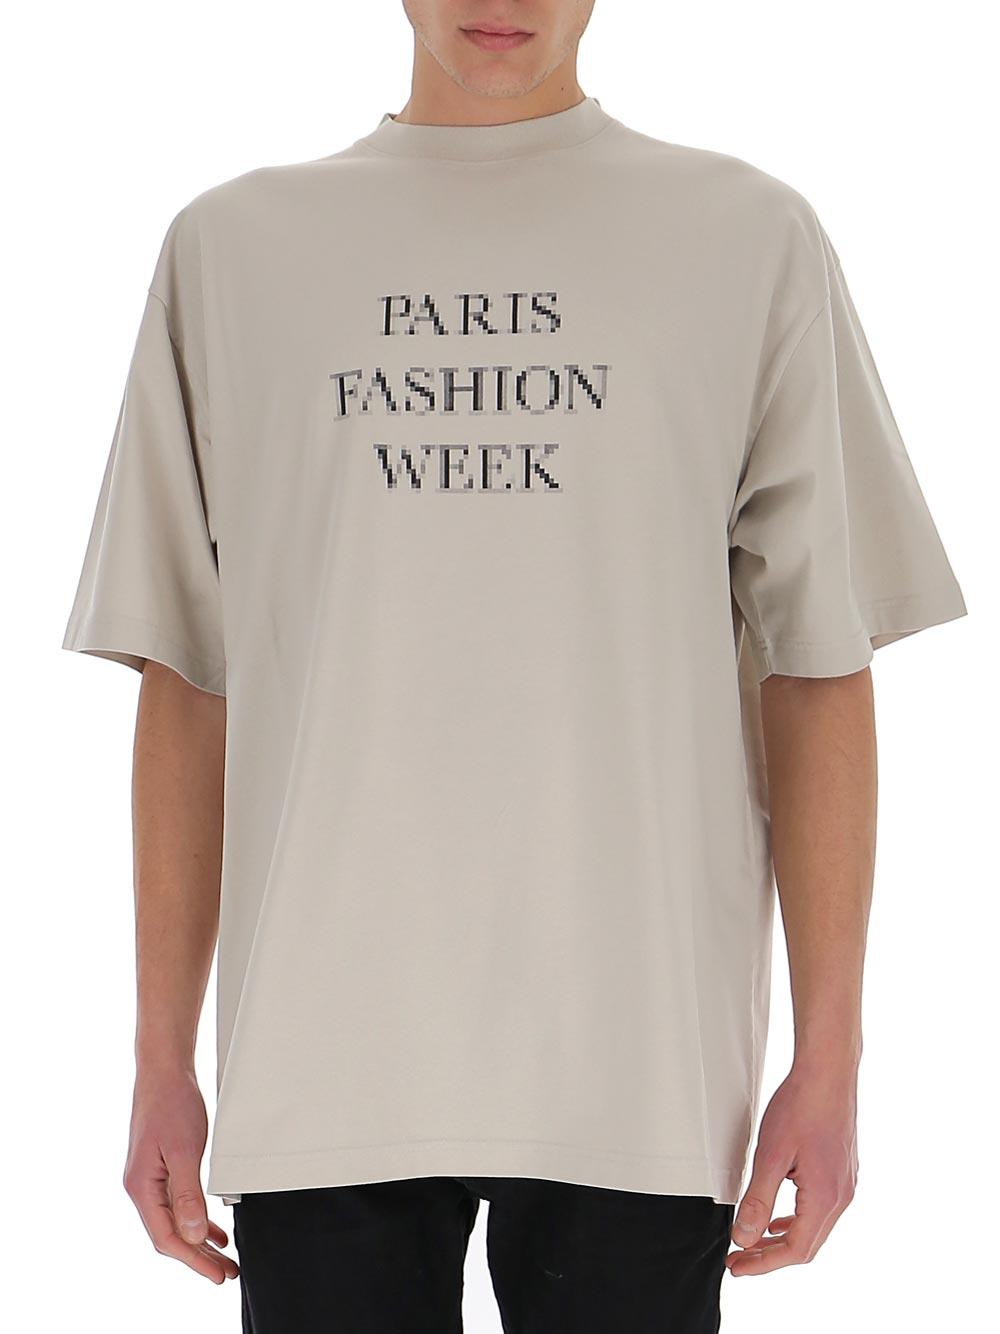 Chi tiết hơn 58 về balenciaga paris fashion week hay nhất - Du học Akina